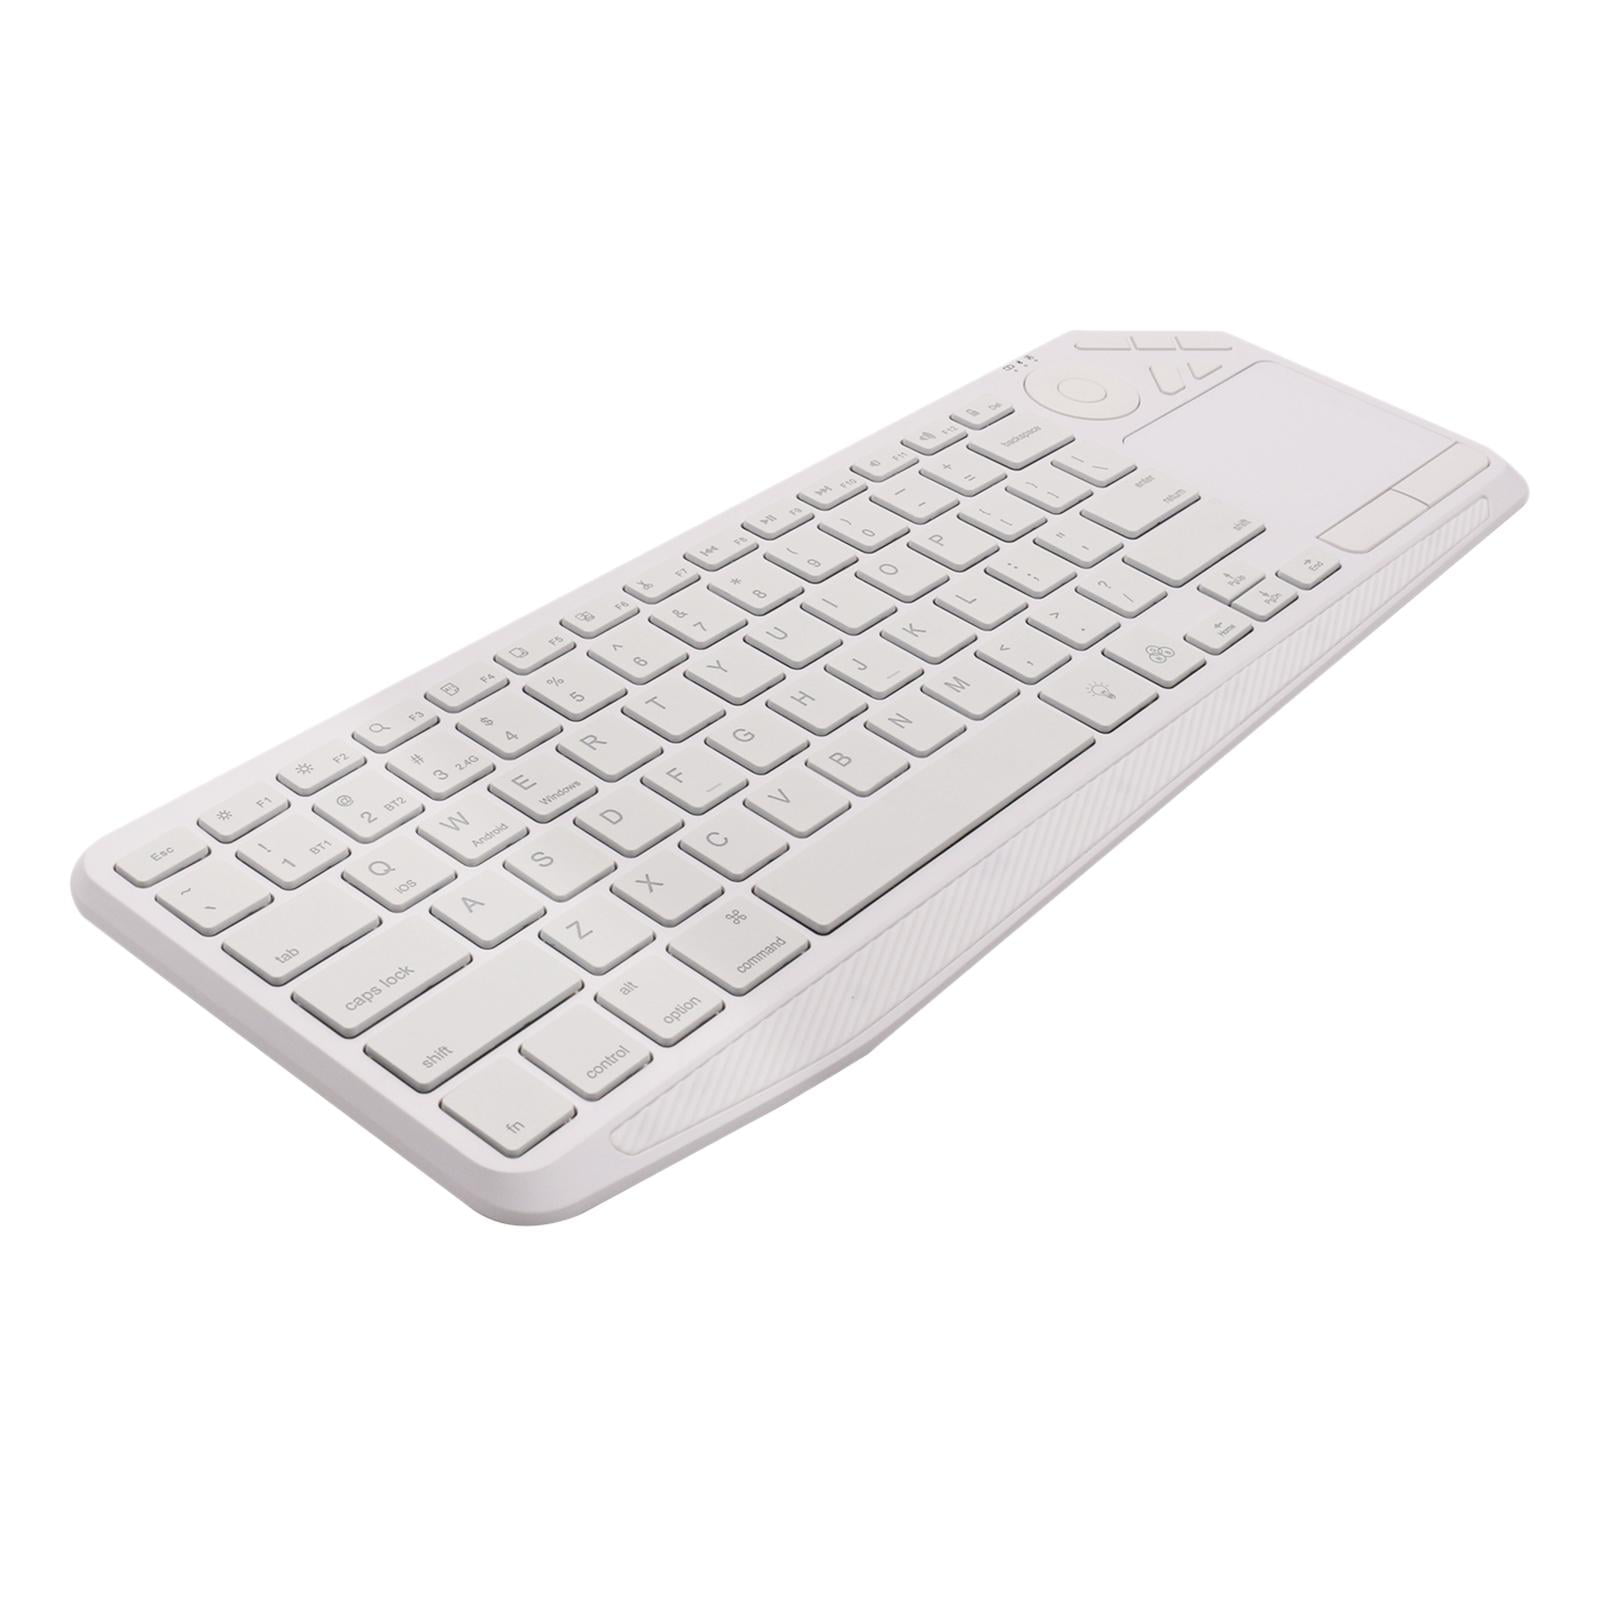 External Touch Control Round Button Portable Wireless Keyboard Wireless Bluetooth Keyboard Rechargeable Wireless Keyboard with a Touchpad White